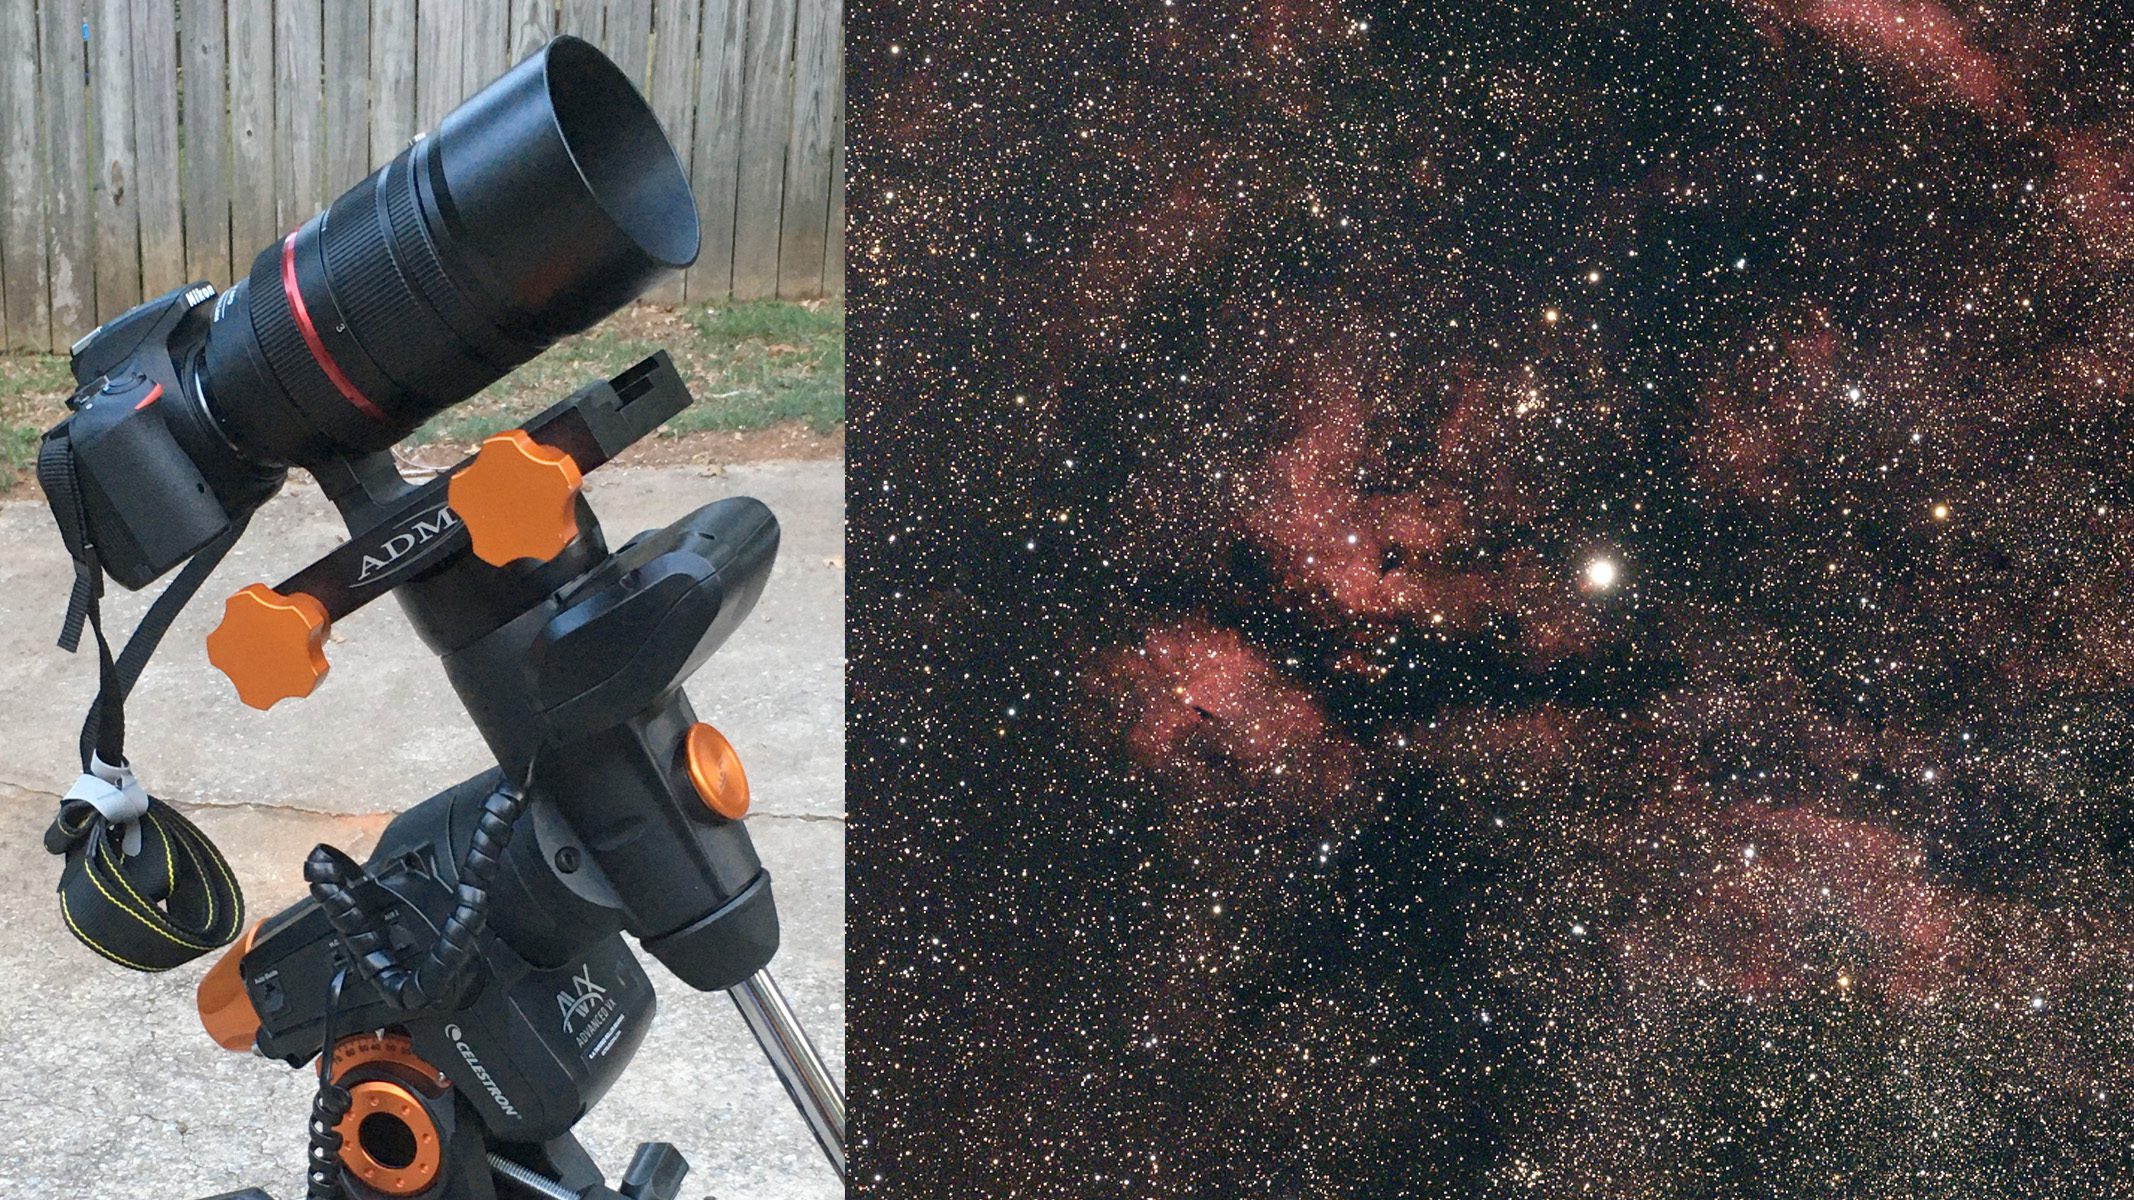 The nebula image is configured next to the telescope setup